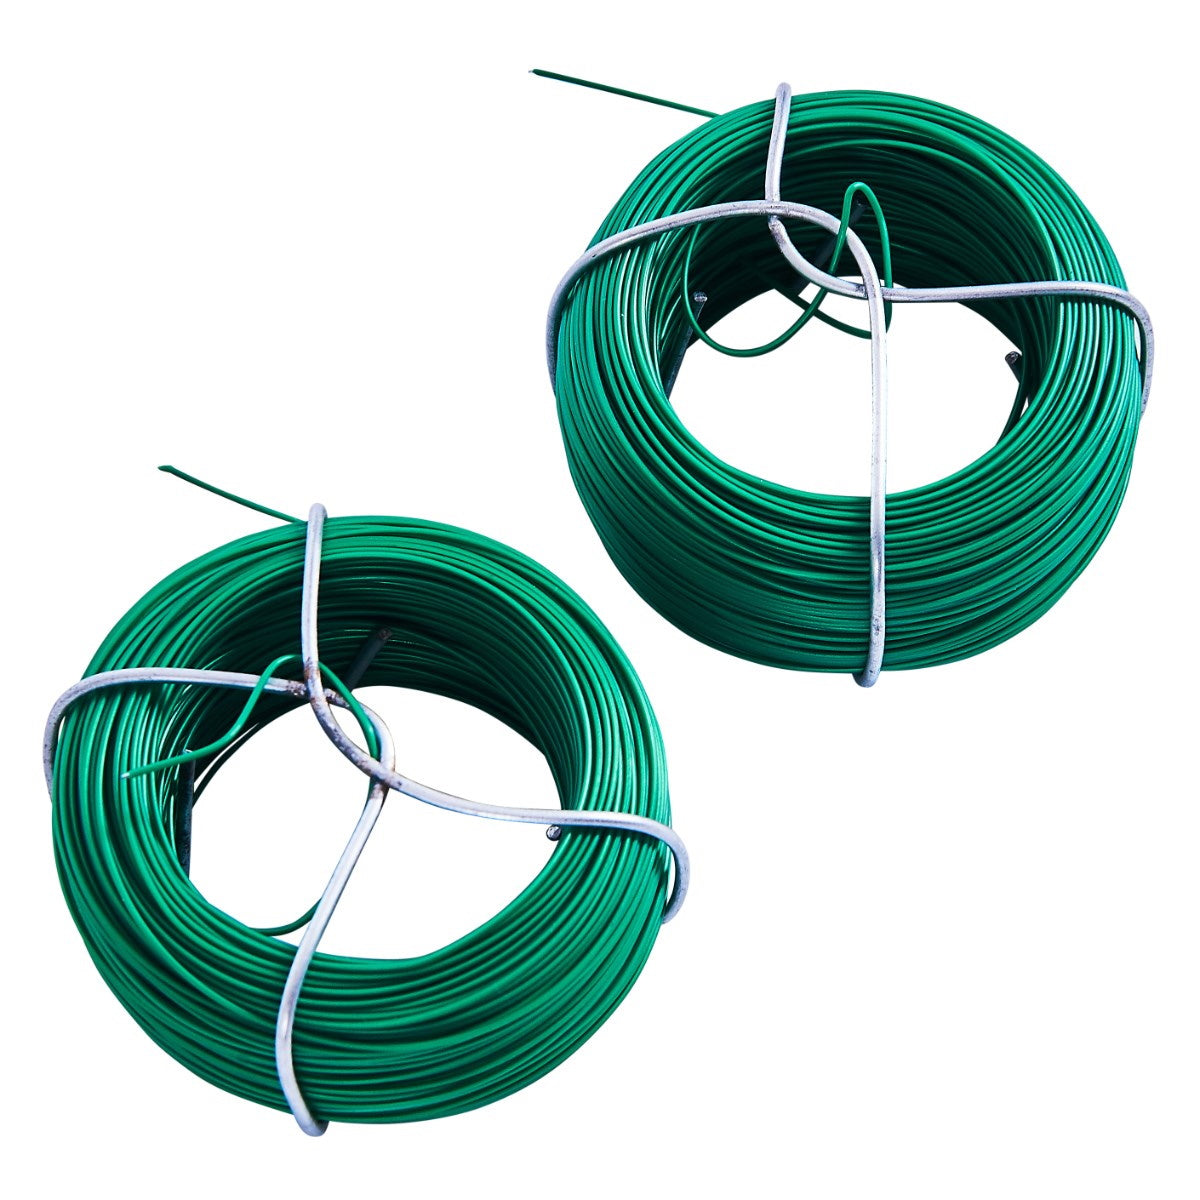 Amtech U4200 Plastic Coated Garden Wire Set 2 x 50Mtr - Premium Garden Wire from DK Tools - Just $2.30! Shop now at W Hurst & Son (IW) Ltd